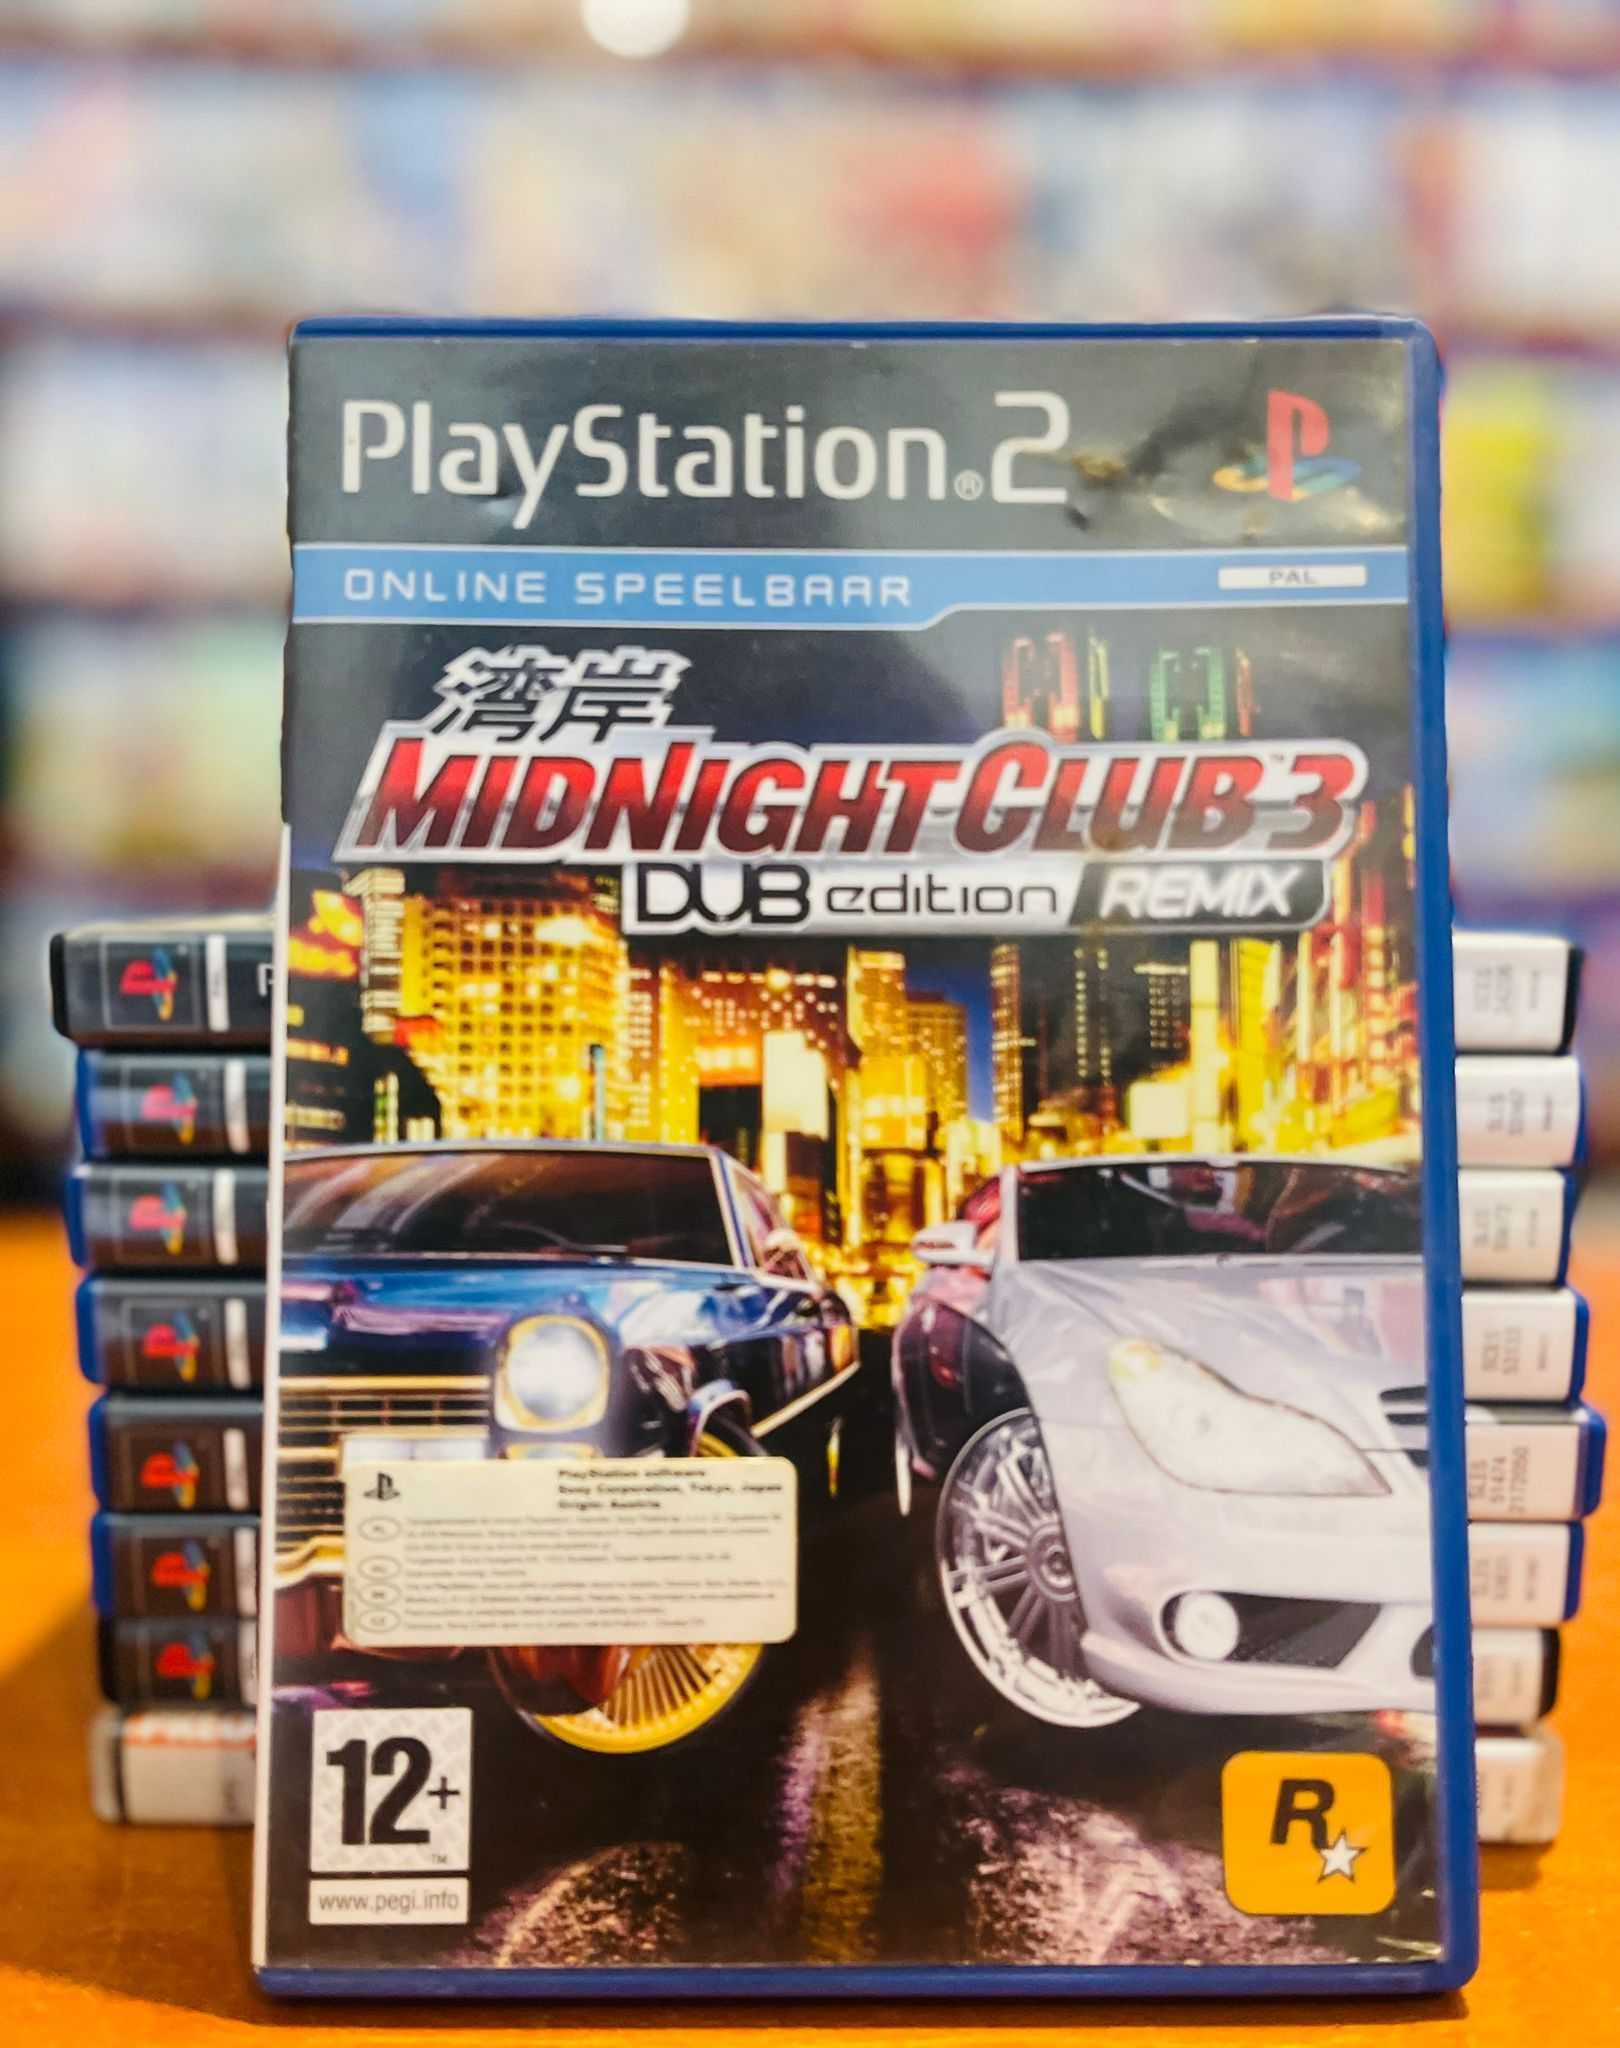 Gra Midnight Club Edition PS2 Dub Edition Remix Poznań